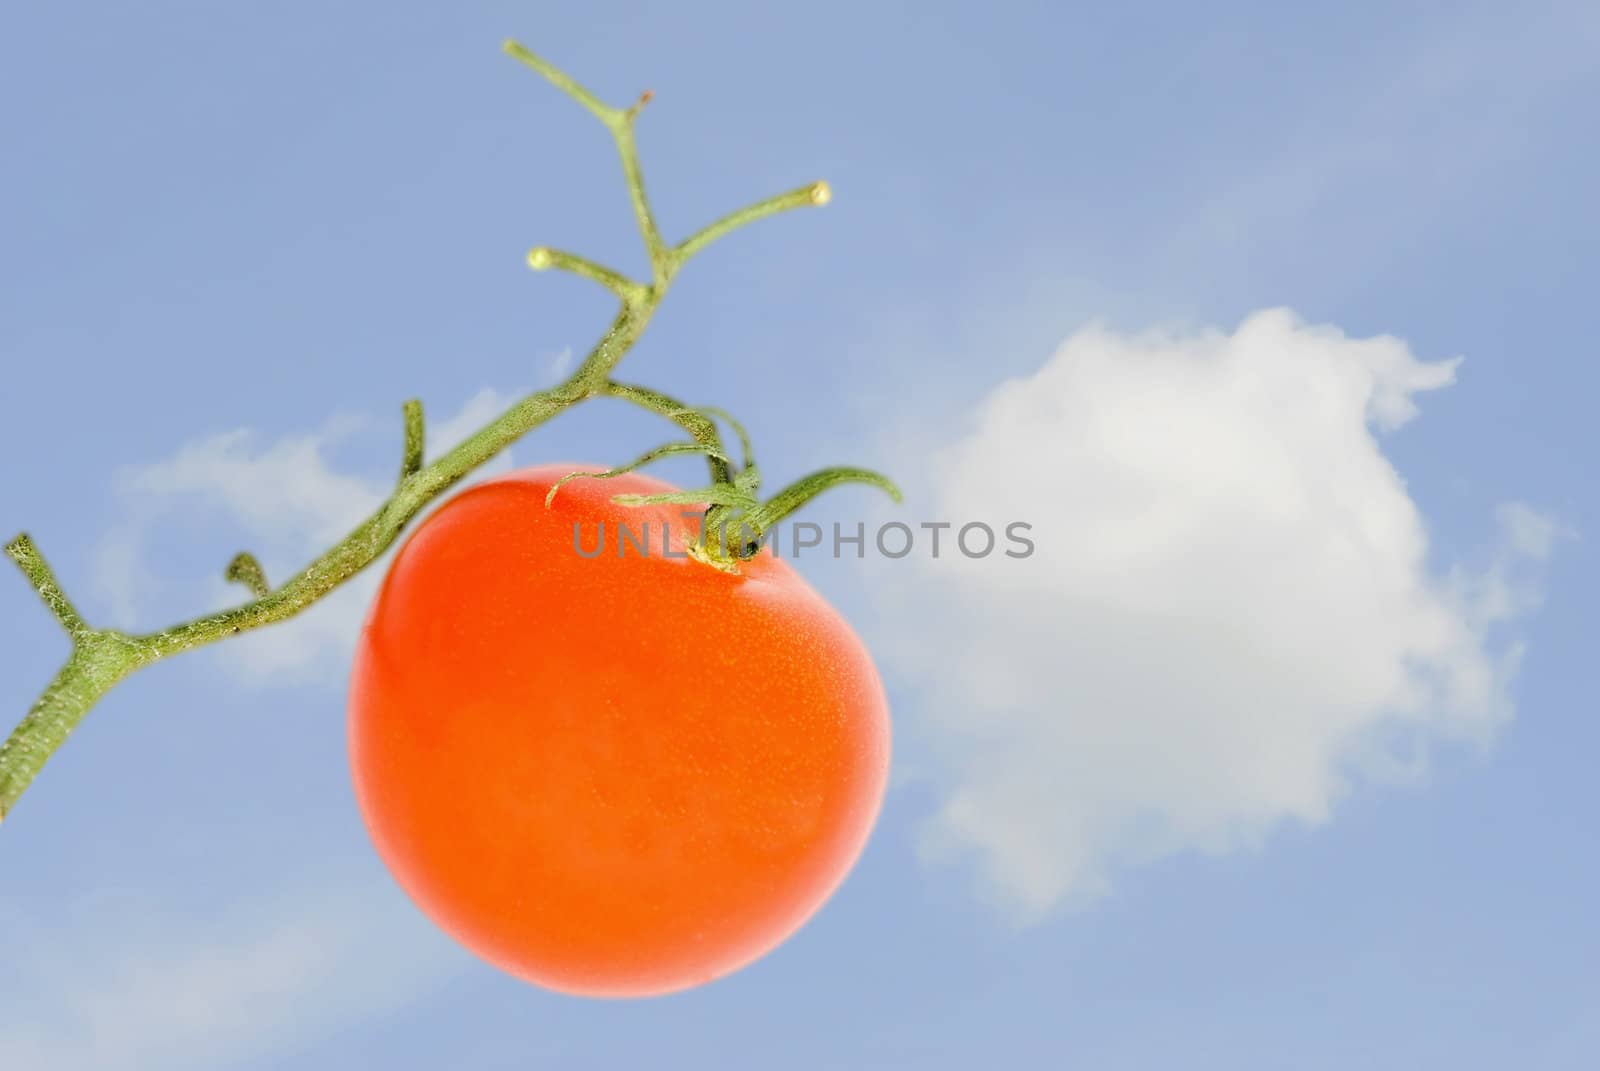 Red tomato by krivsun